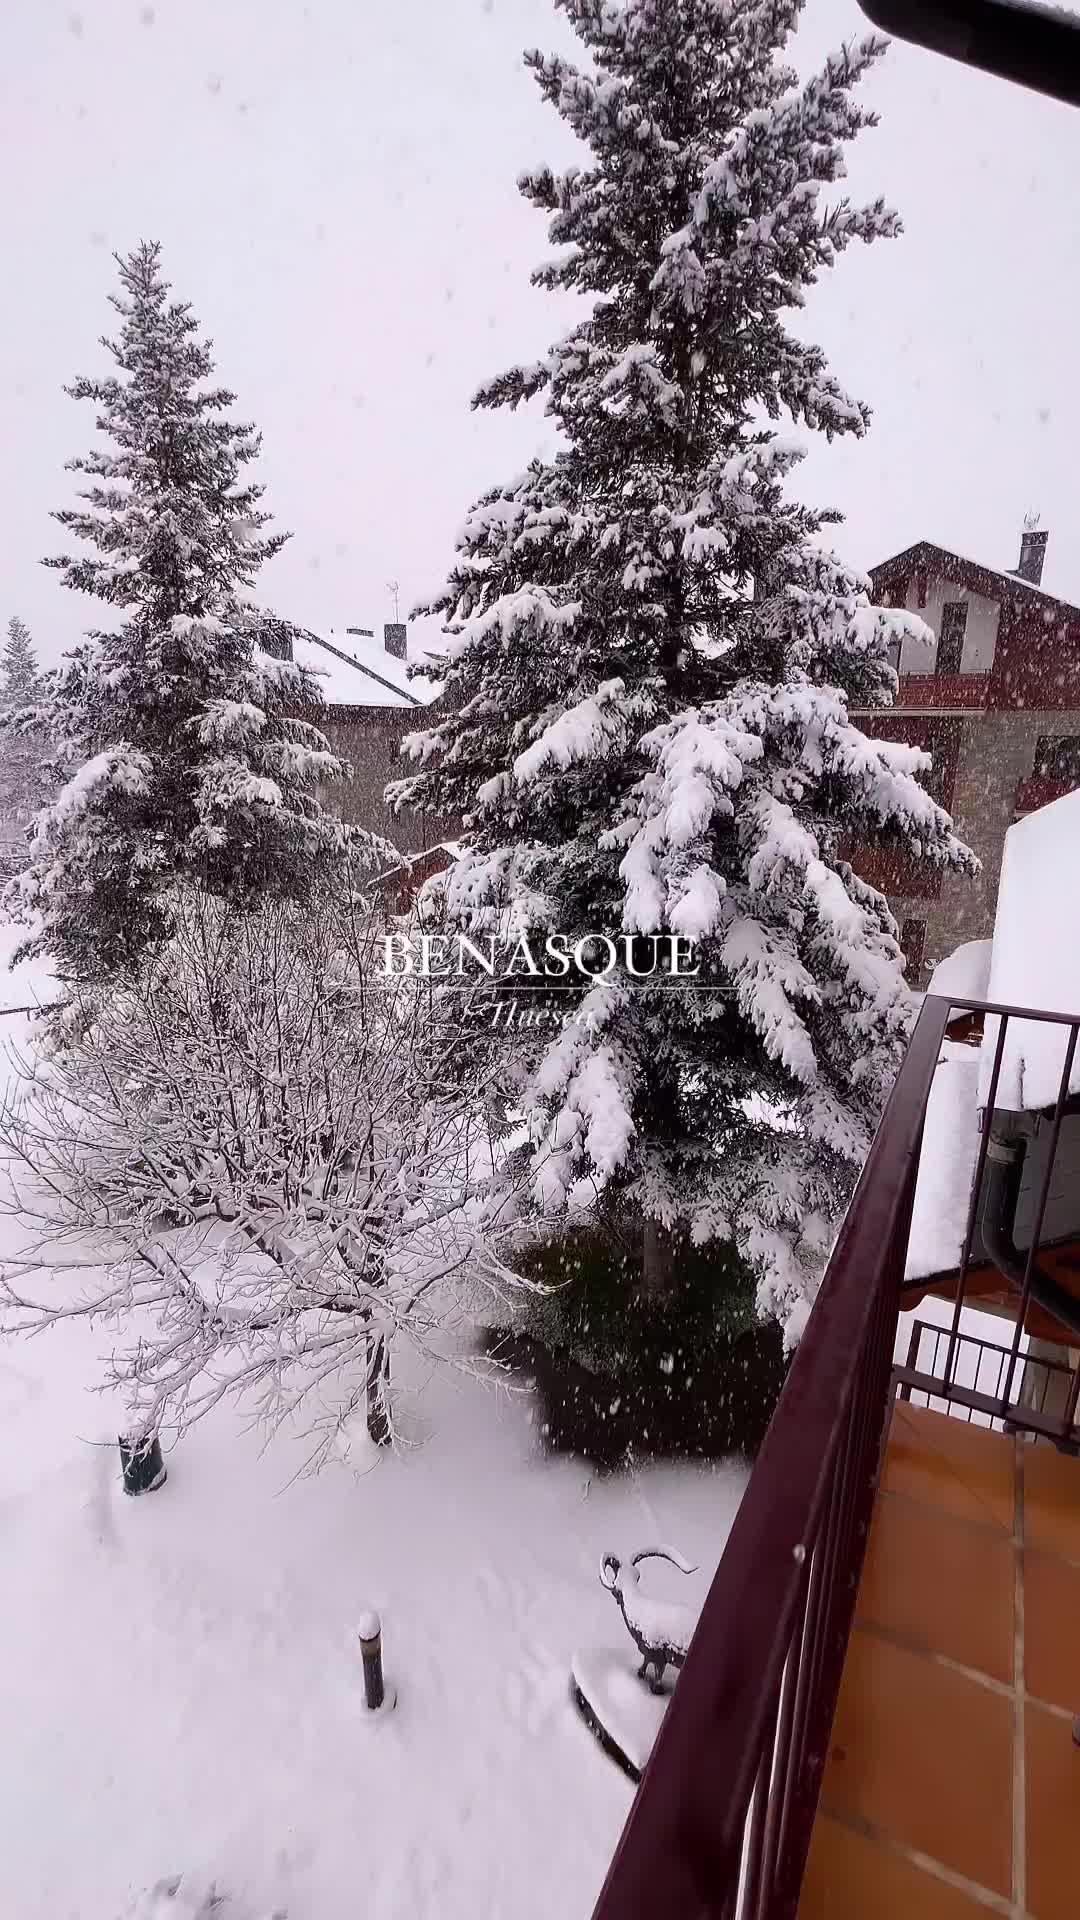 First Heavy Snowfalls in Benasque, Huesca 🌨️❄️